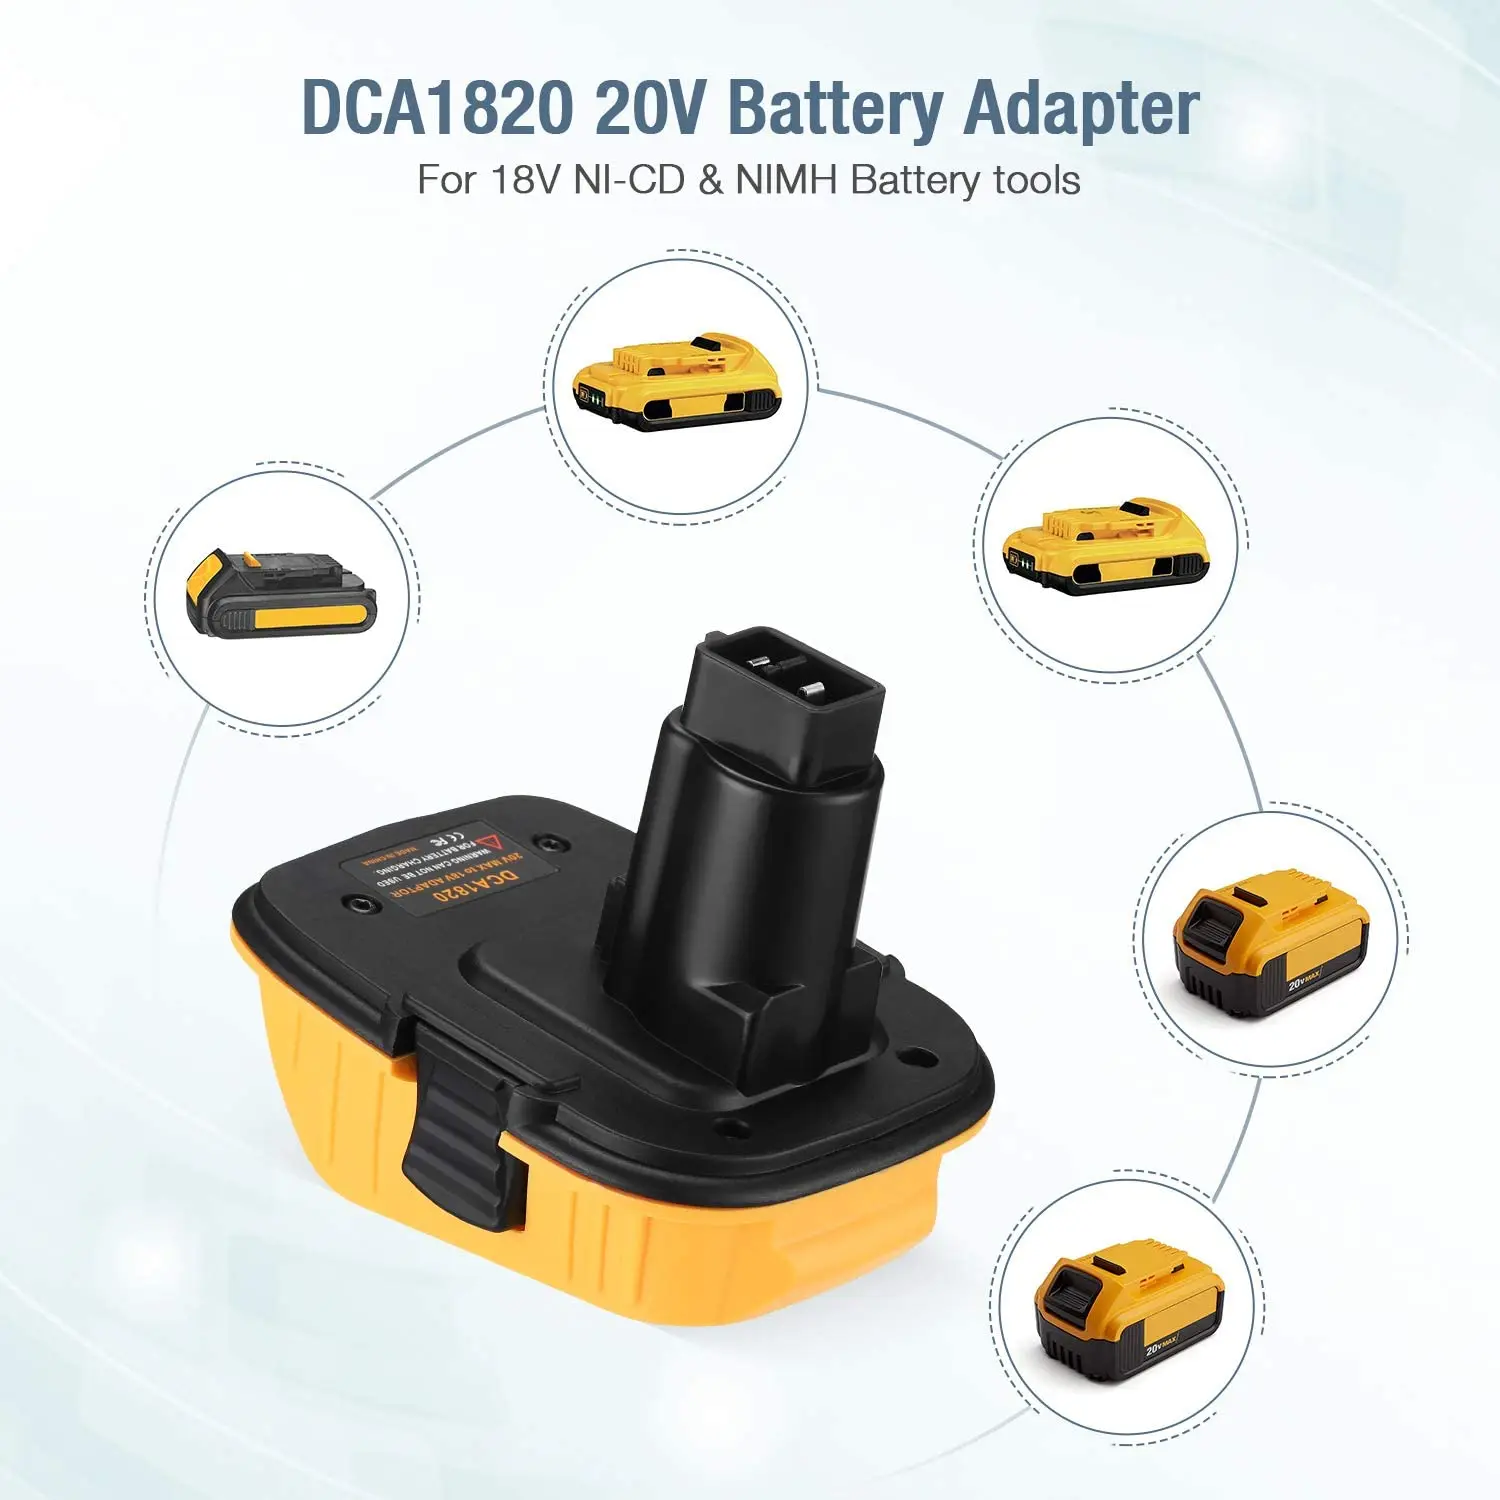 Pro dewalt 18V nástroje převést pro dewalt 20V as i lay dying baterie DCA1820 baterie adaptér práce pro dewalt maxi dcb200 dcb201 dcb203